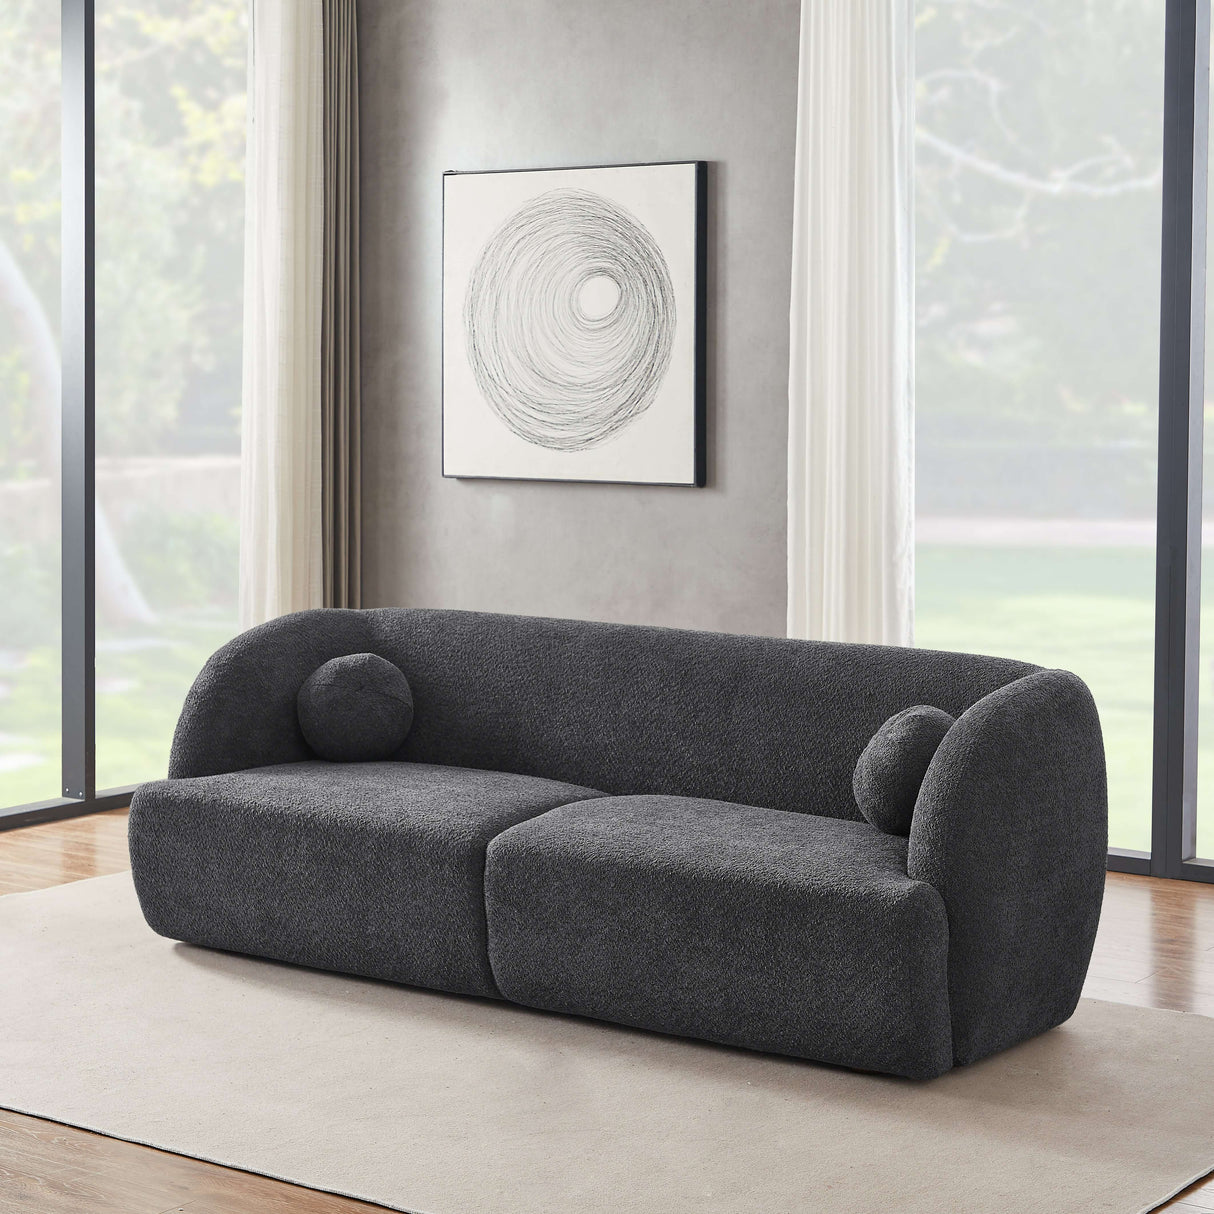 Anna French Boucle Sofa Pink - AFC00182 - Luna Furniture